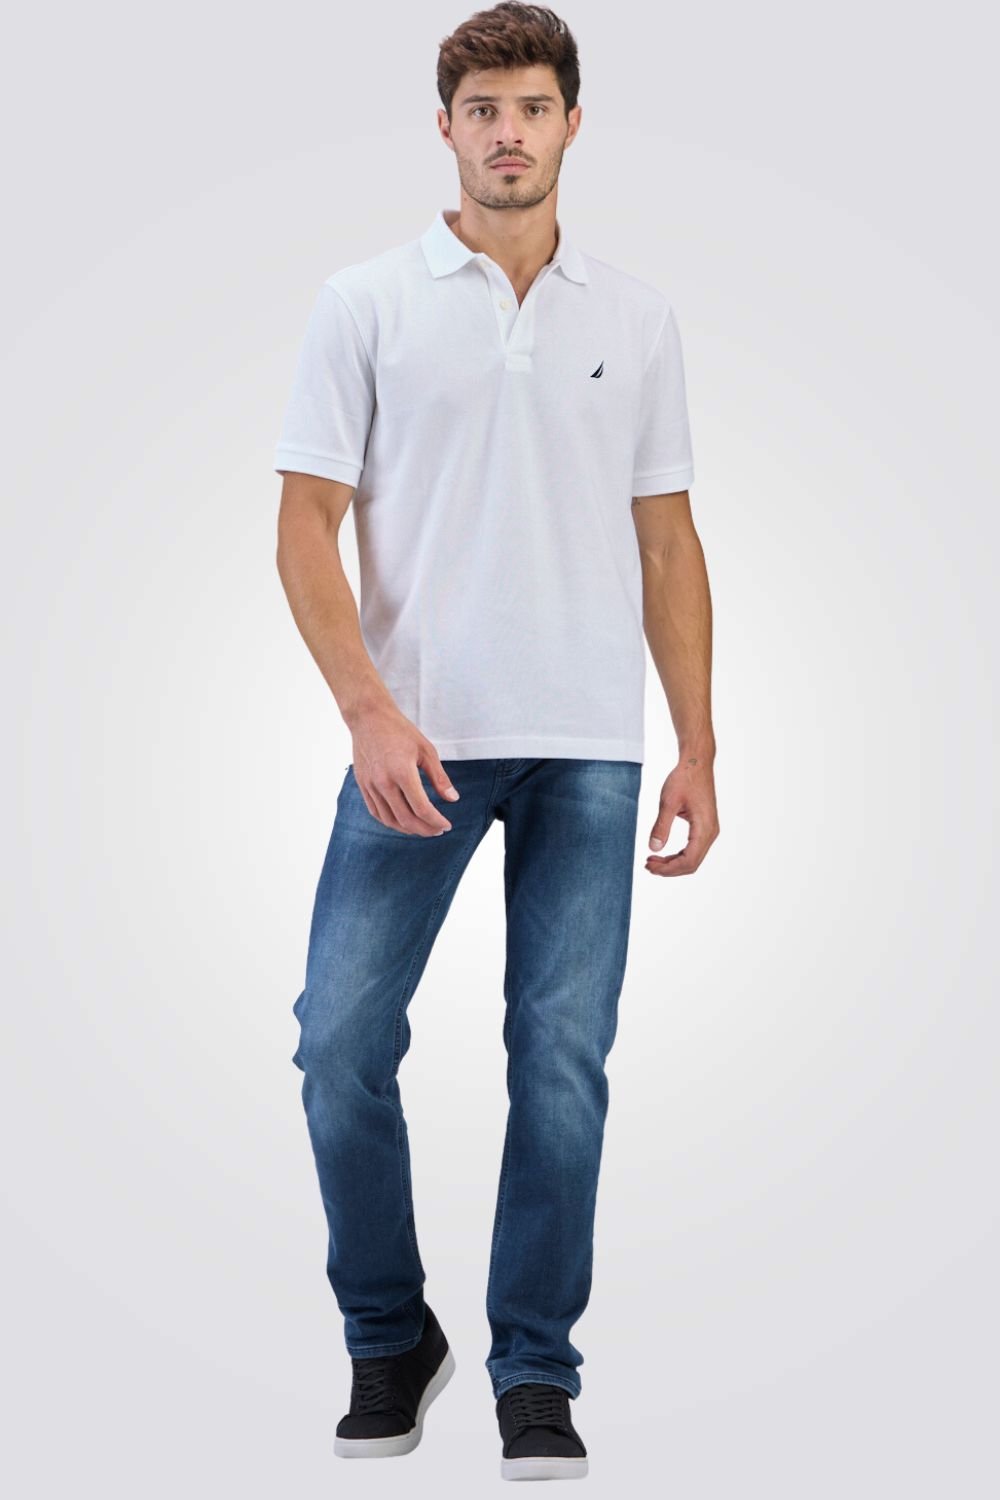 NAUTICA - חולצת פולו לגברים CLASSIC FIT DECK בצבע לבן - MASHBIR//365